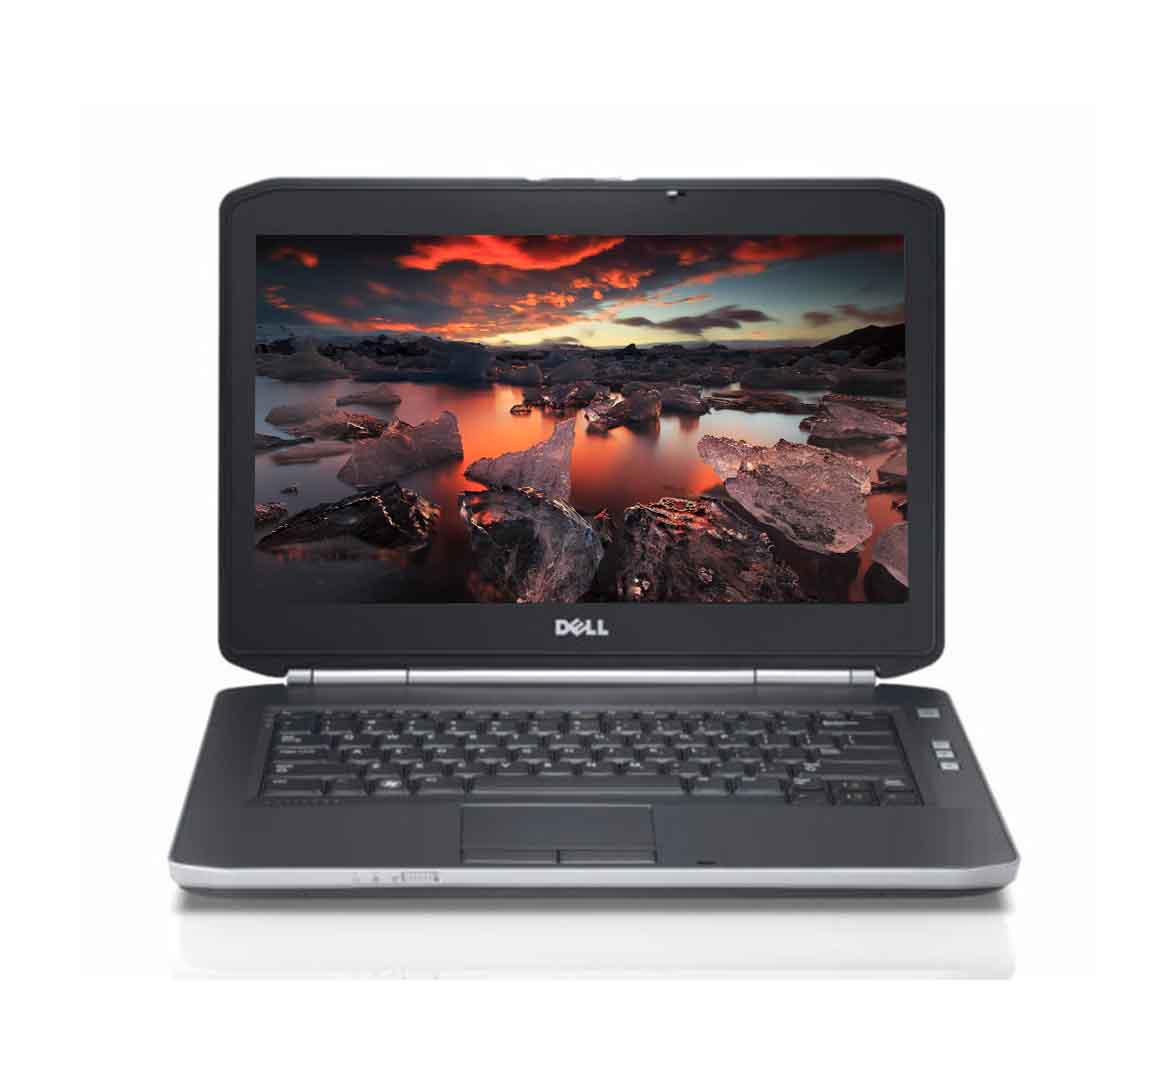 Dell Latitude E5420 Business Laptop, Intel Core i5-2nd Generation CPU, 4GB RAM, 500GB HDD, 14 inch Display, Windows 10 Pro, Refurbished Laptop